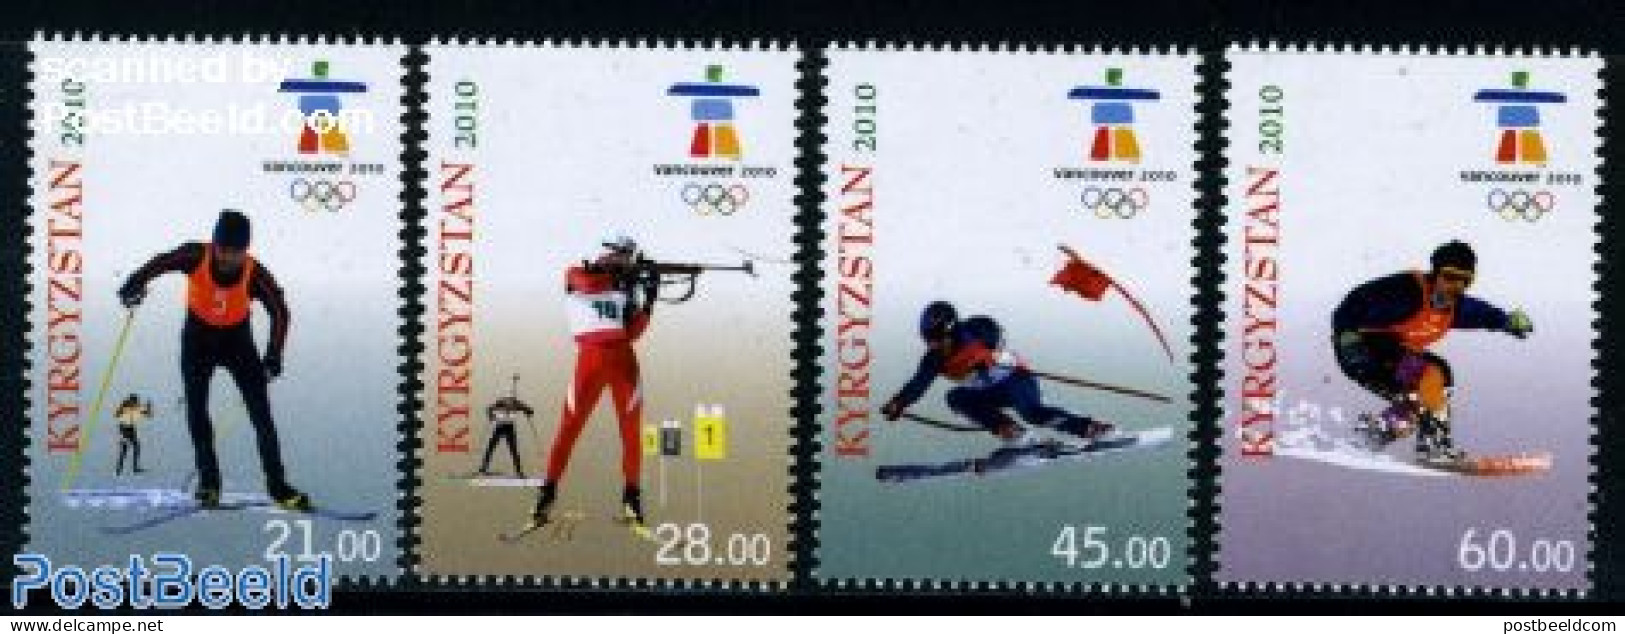 Kyrgyzstan 2010 Vancouver Winter Olympics 4v, Mint NH, Sport - Olympic Winter Games - Shooting Sports - Skiing - Tir (Armes)